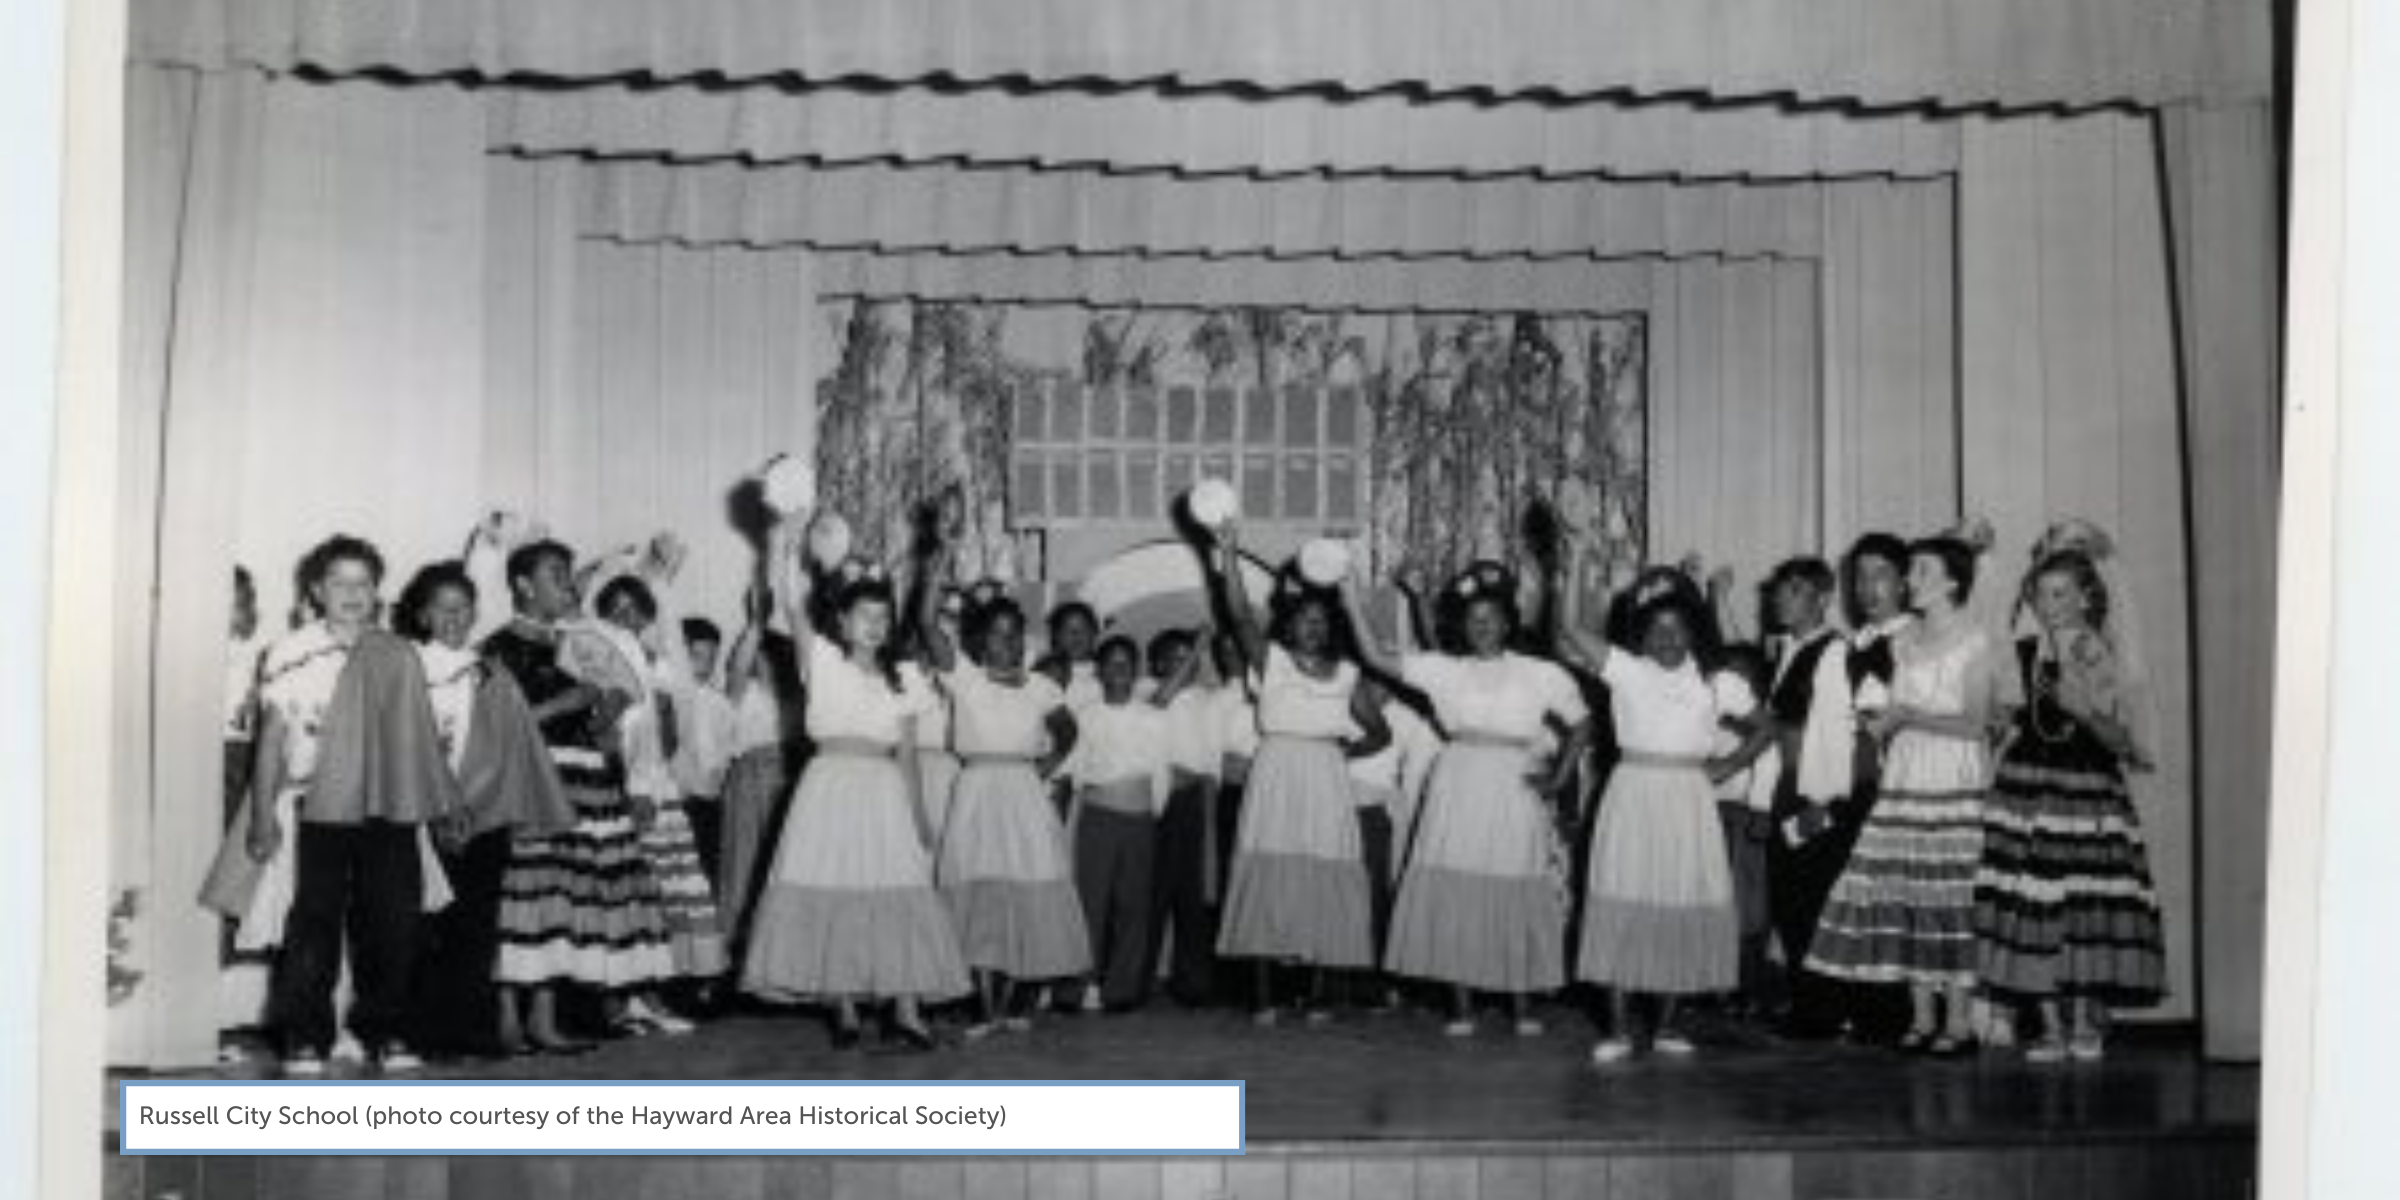 Russell City School (photo courtesy of the Hayward Area Historical Society)